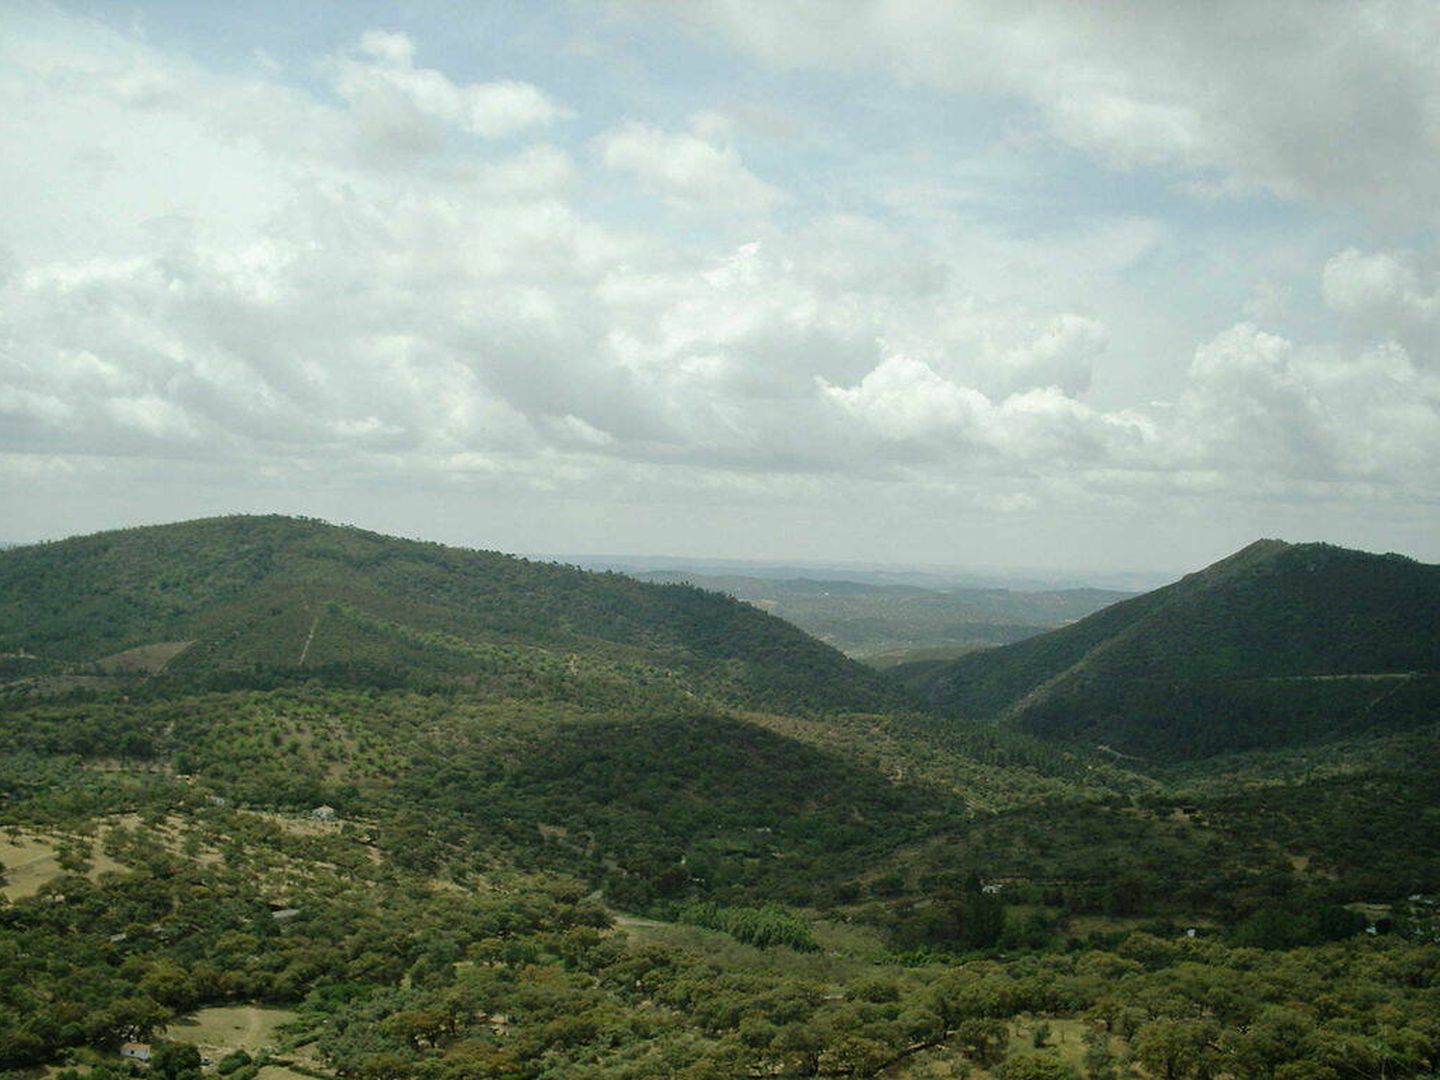 Paisaje de la Sierra de Aracena, que forma parte de Sierra Morena. (Wikimedia Commons)